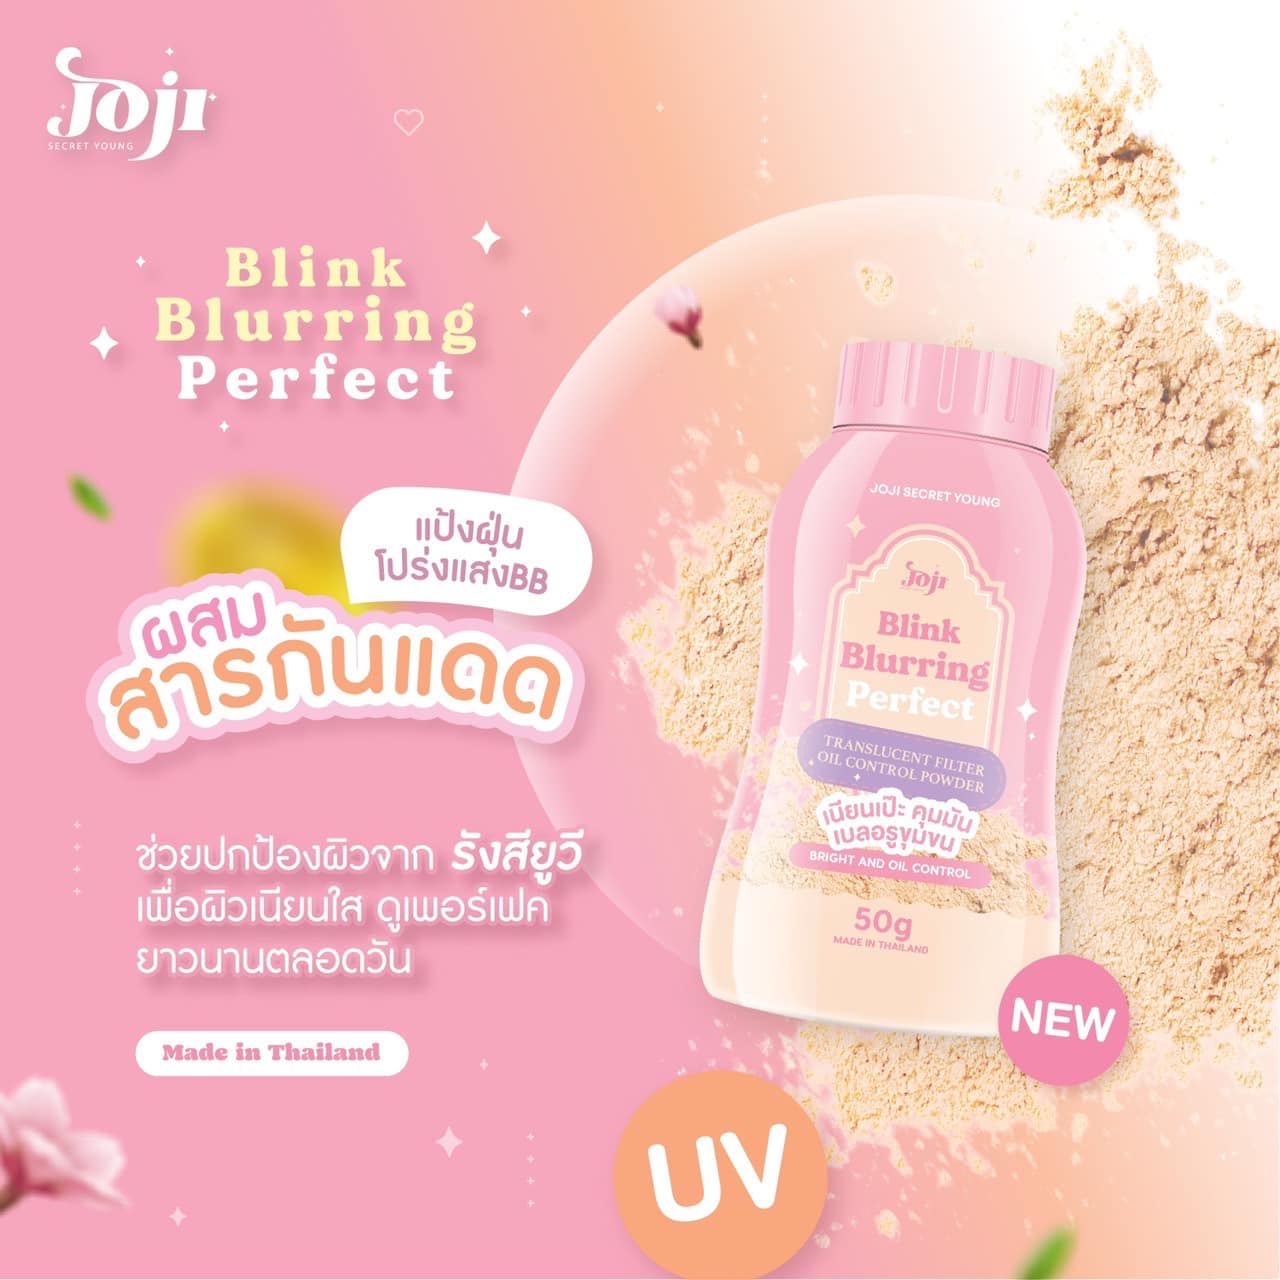 Joji Blink Blurring Perfect Translucent Filter Oil Control Powder